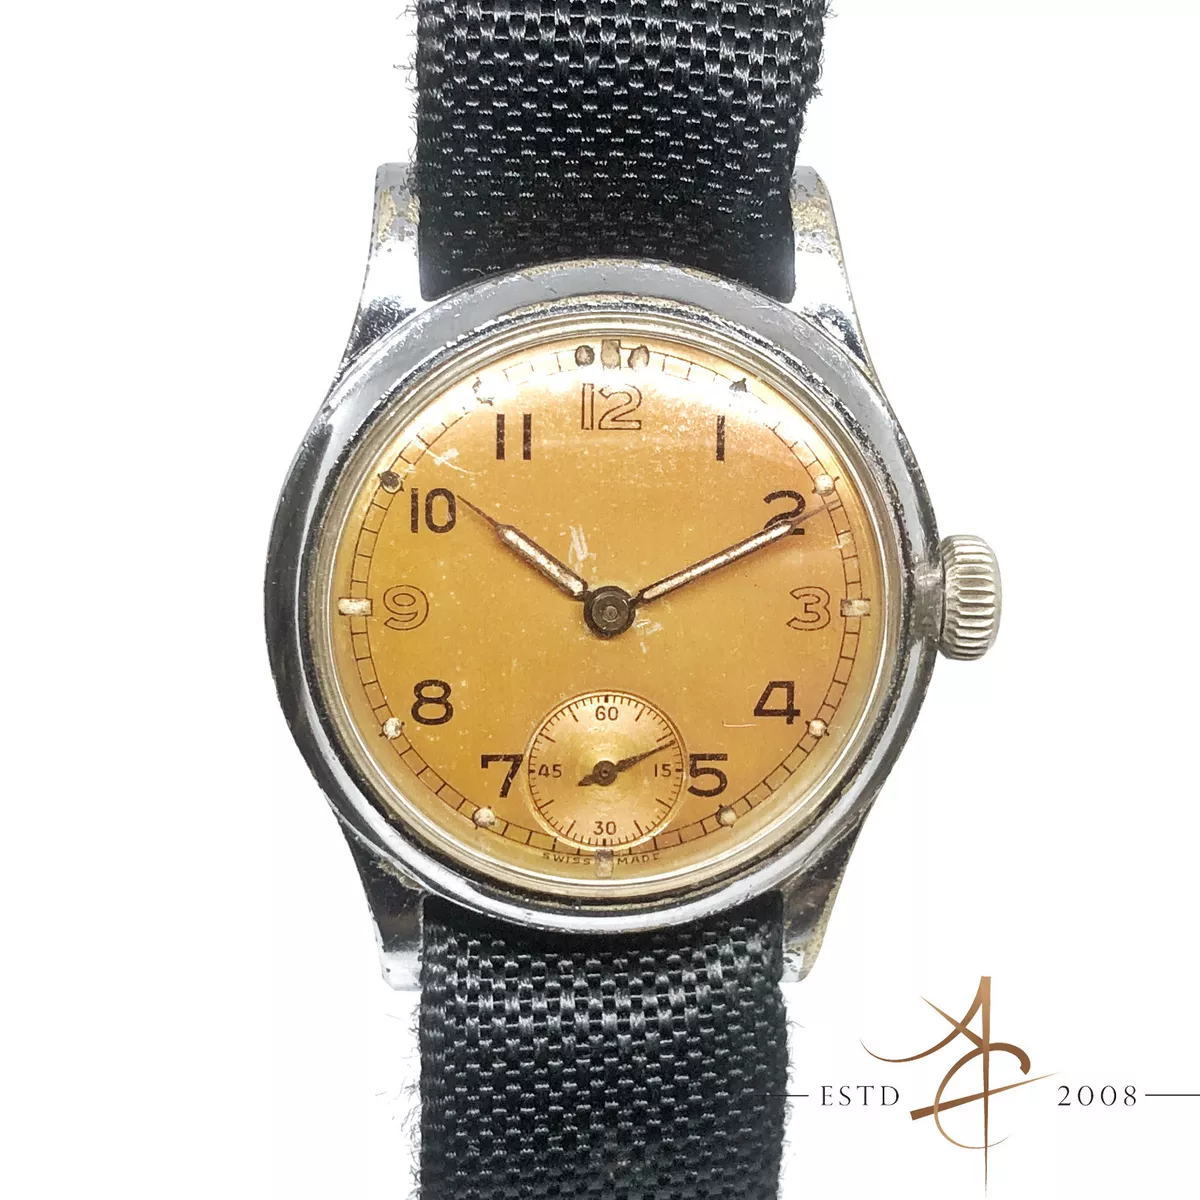 ATP Military Vintage Winding Watch eBay